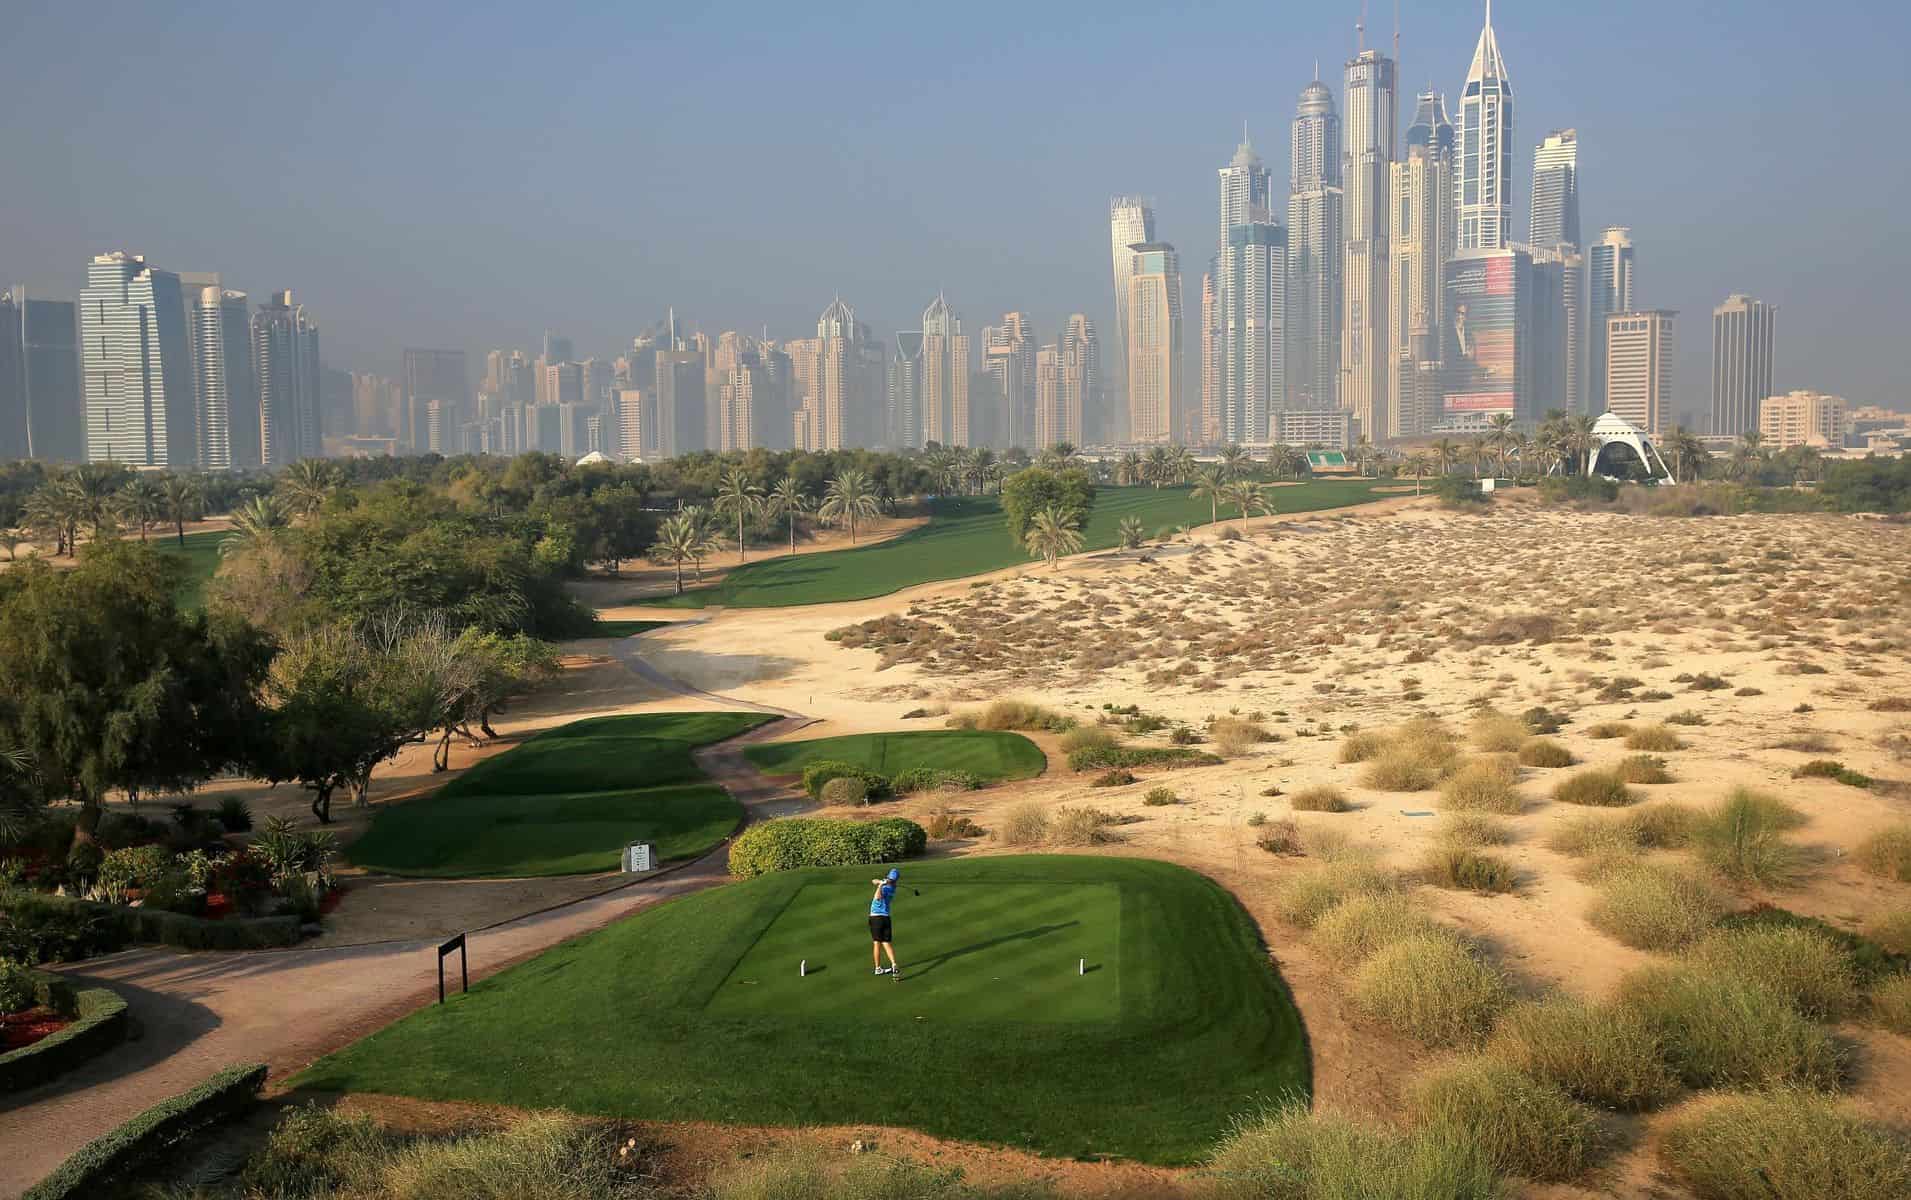 Emirates golf club, Majlis, Dubai